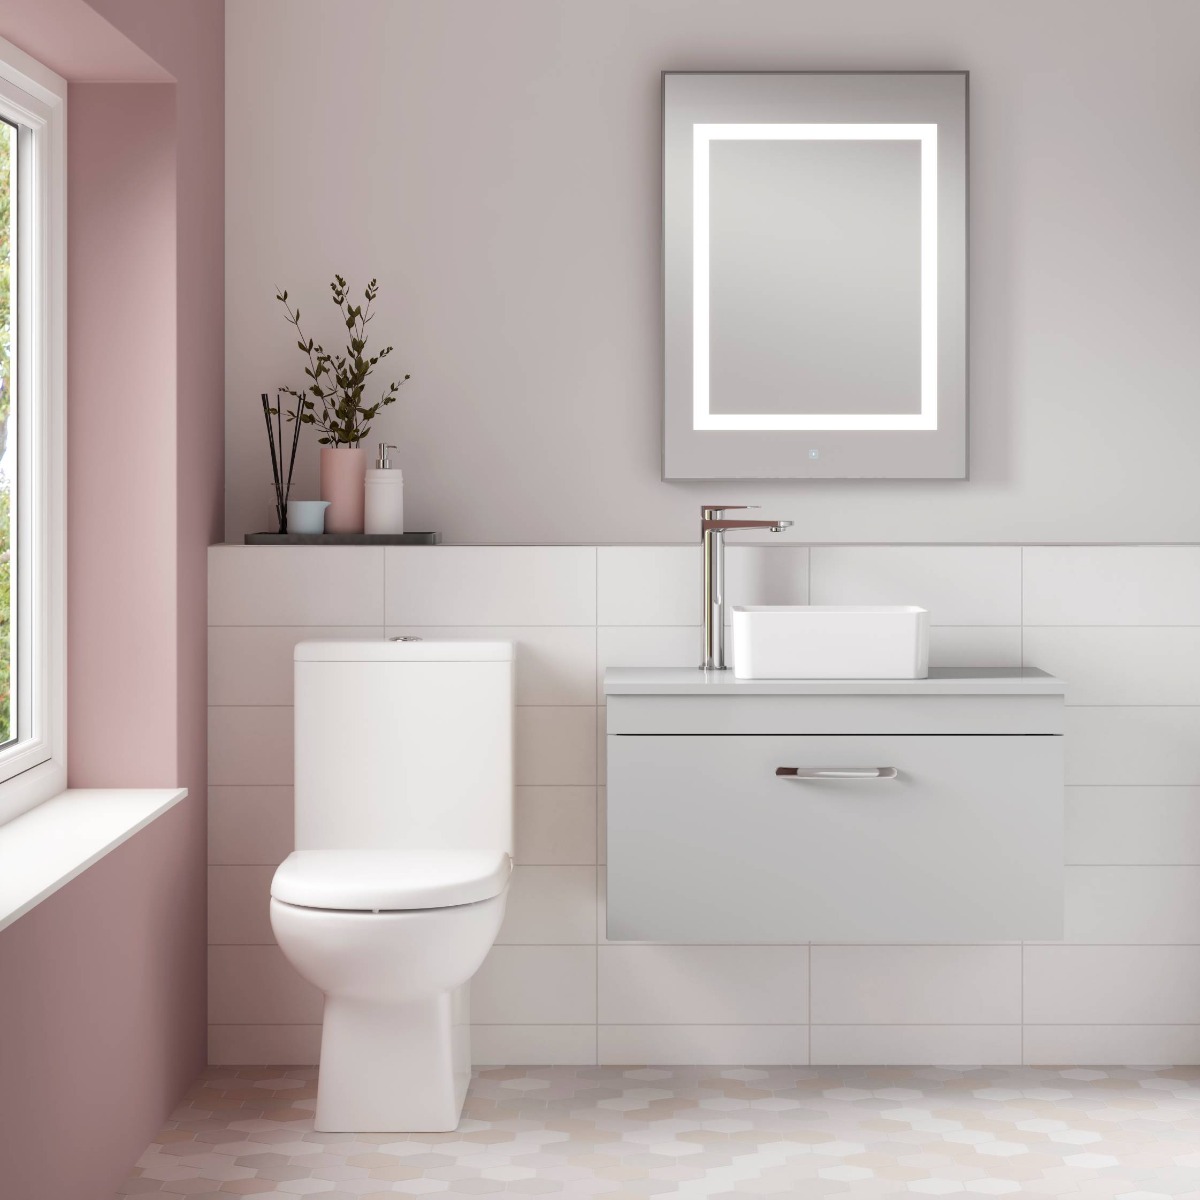 grey vanity unit in pink bathroom